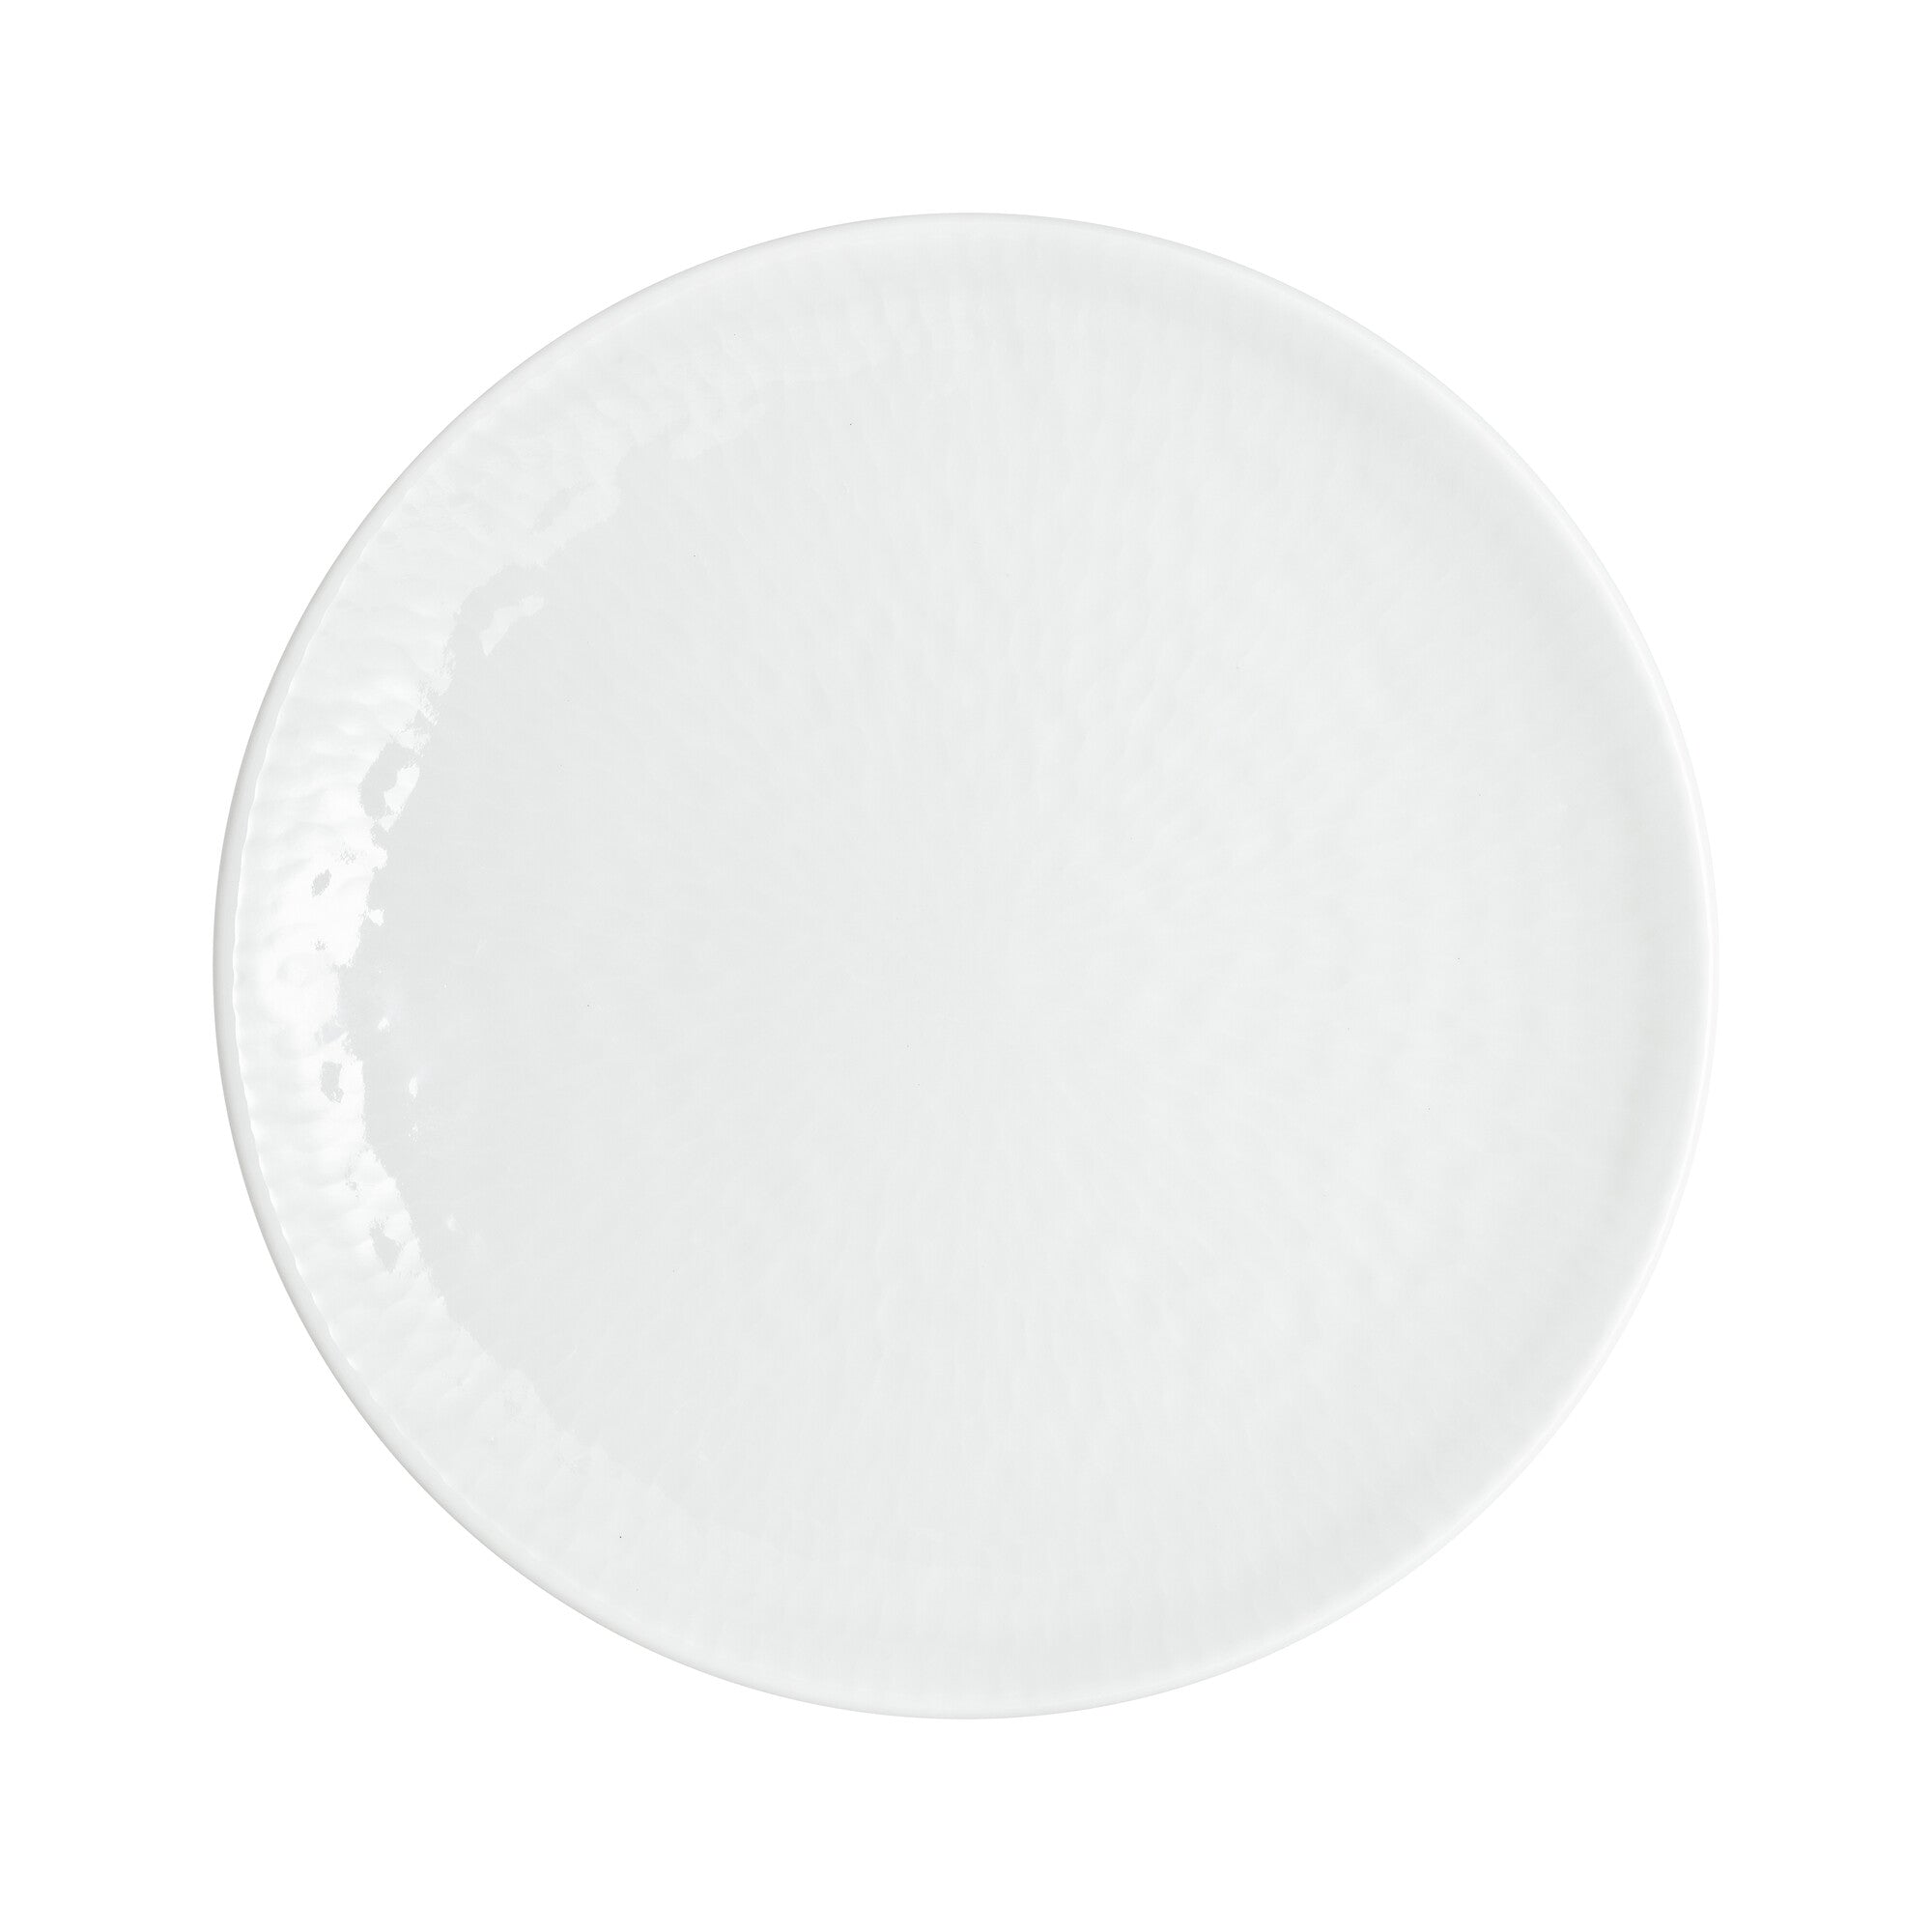 Denby Carve White Porcelain Small Plate